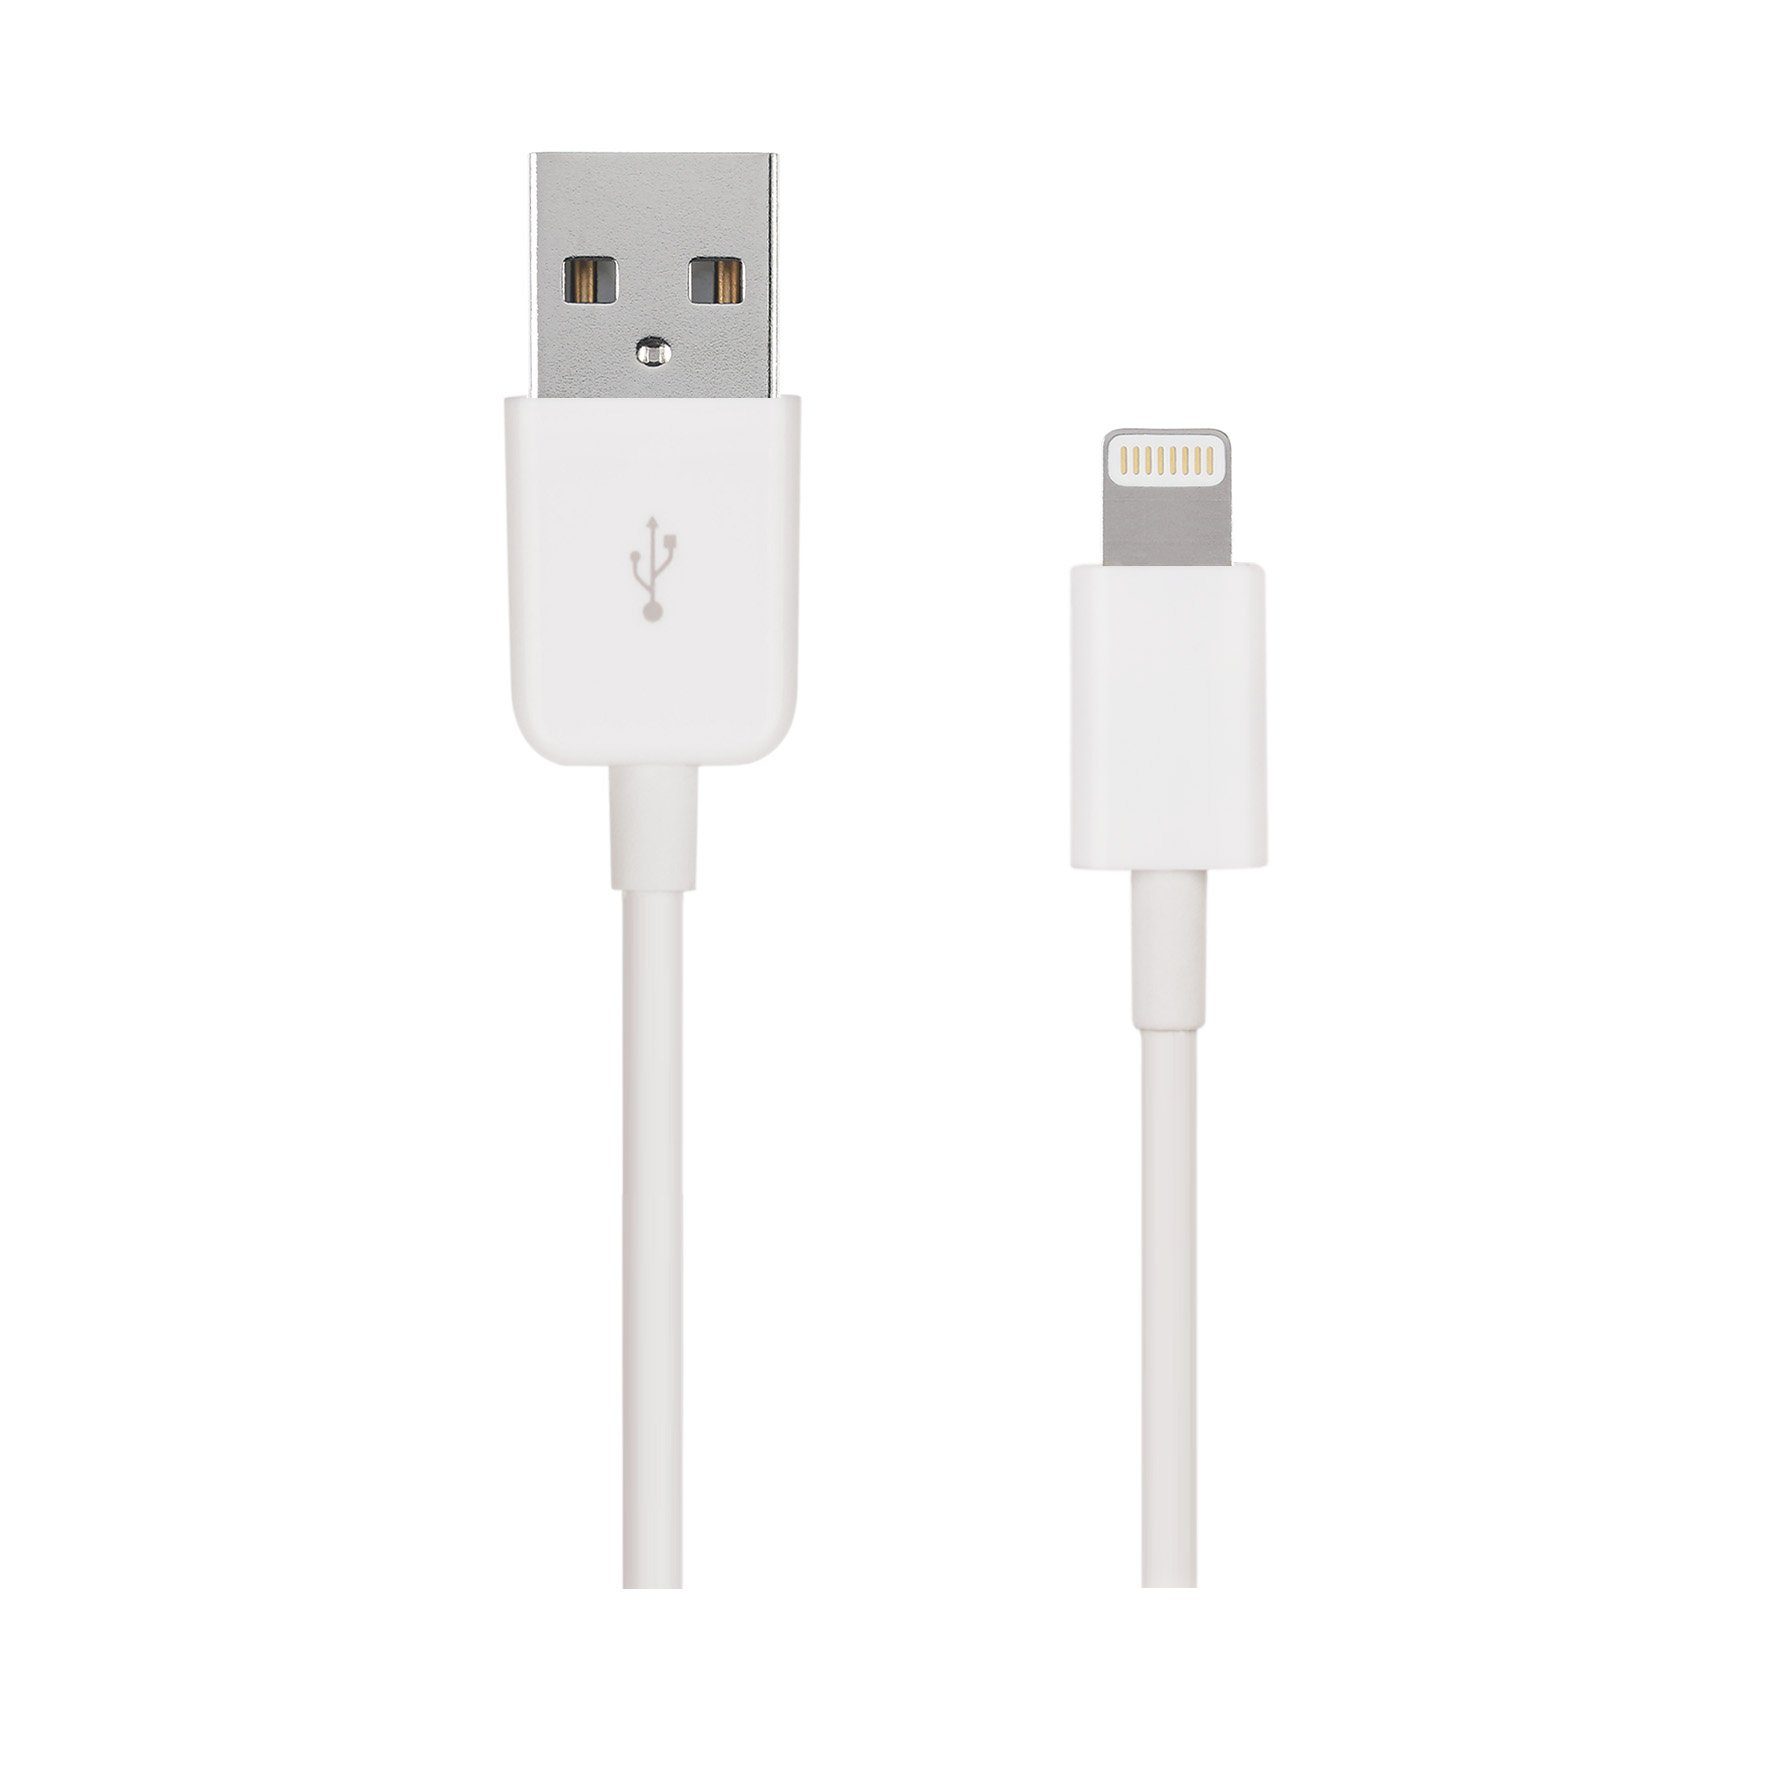 Artwizz »Artwizz Lightning Cable - Ladekabel geeignet für iPhone, iPad,  iPod [MFI Zertifiziert] - Weiß - 50cm« Lightningkabel, Lightning, USB-A  online kaufen | OTTO